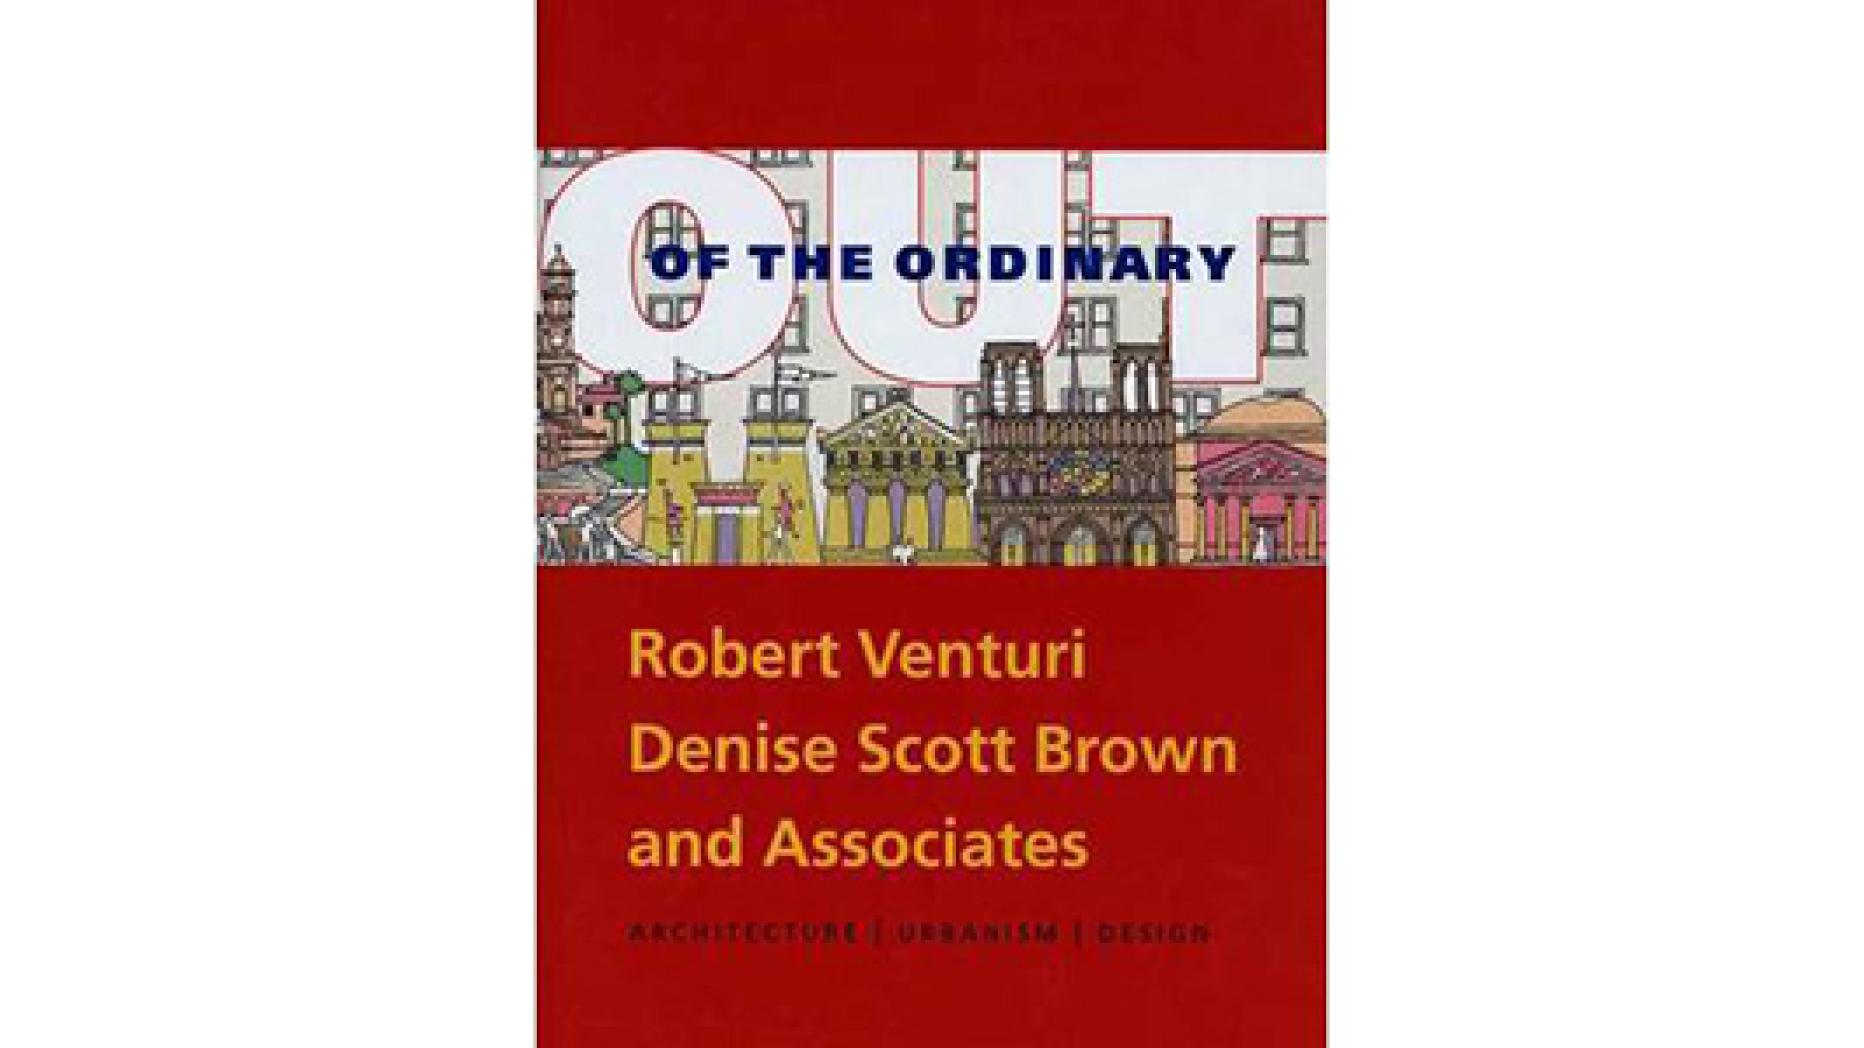 Out of the Ordinary: Robert Venturi, Denise Scott Brown and Associates